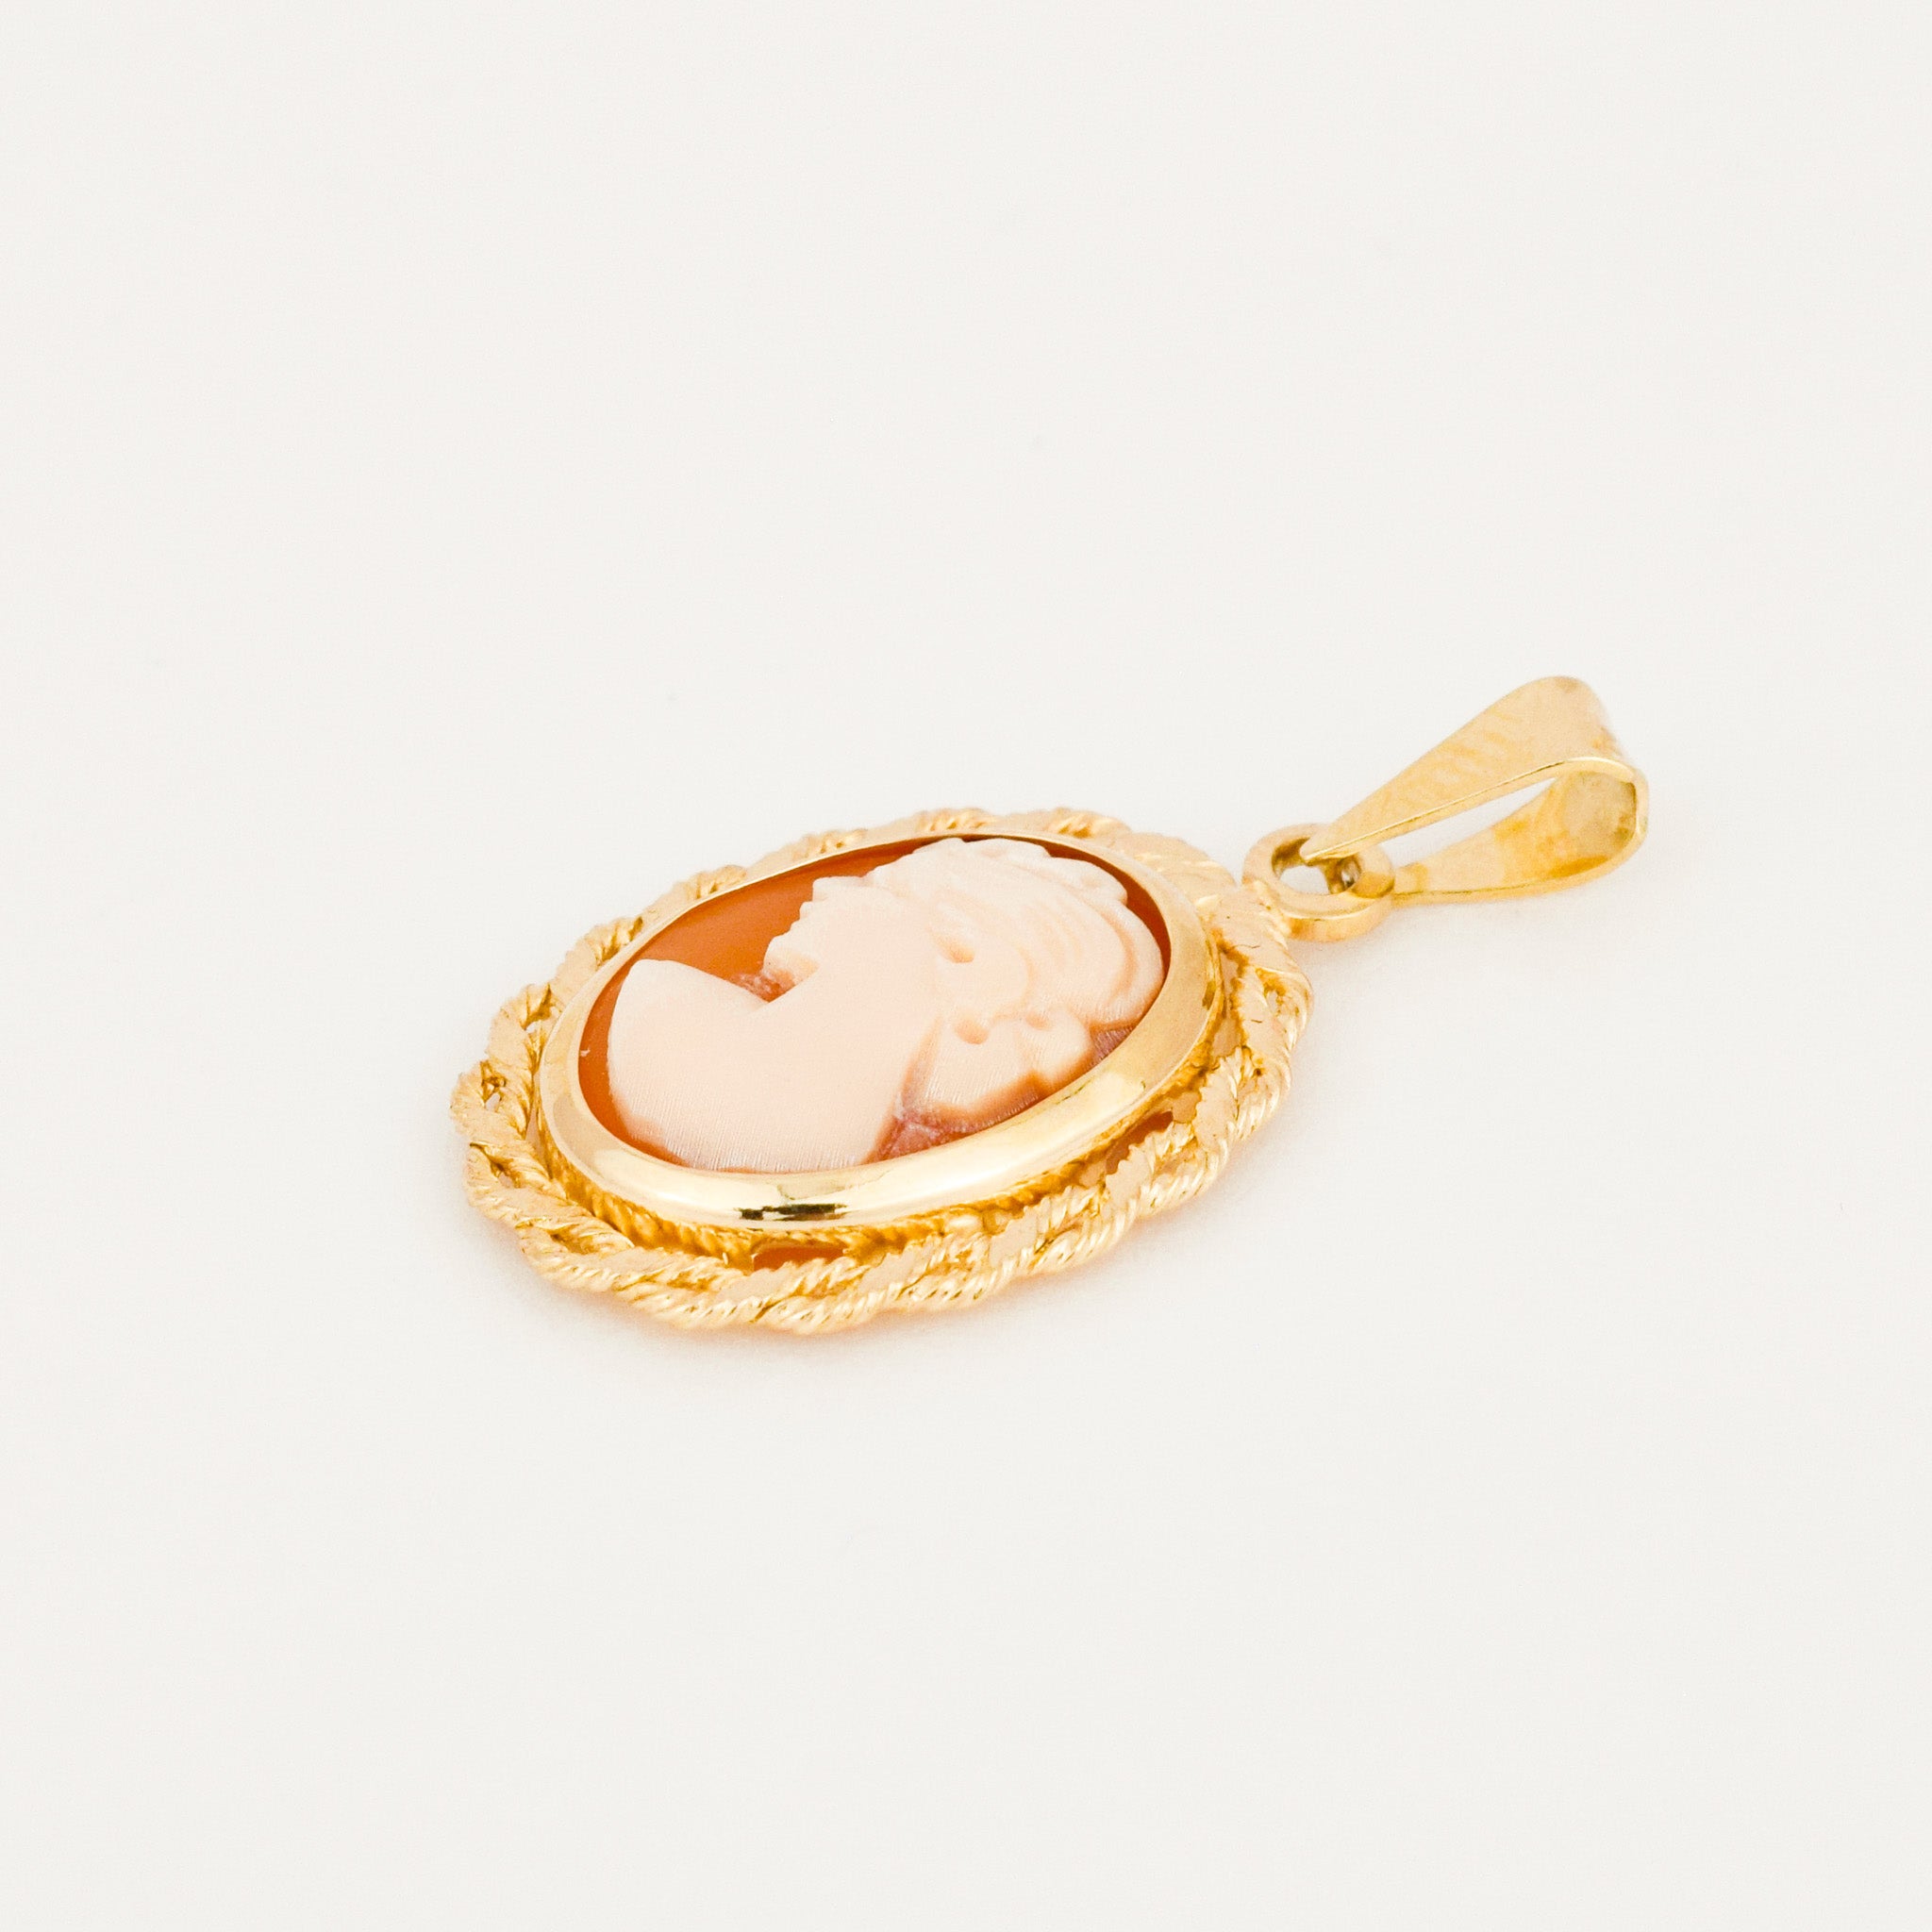 vintage gold cameo charm pendant 